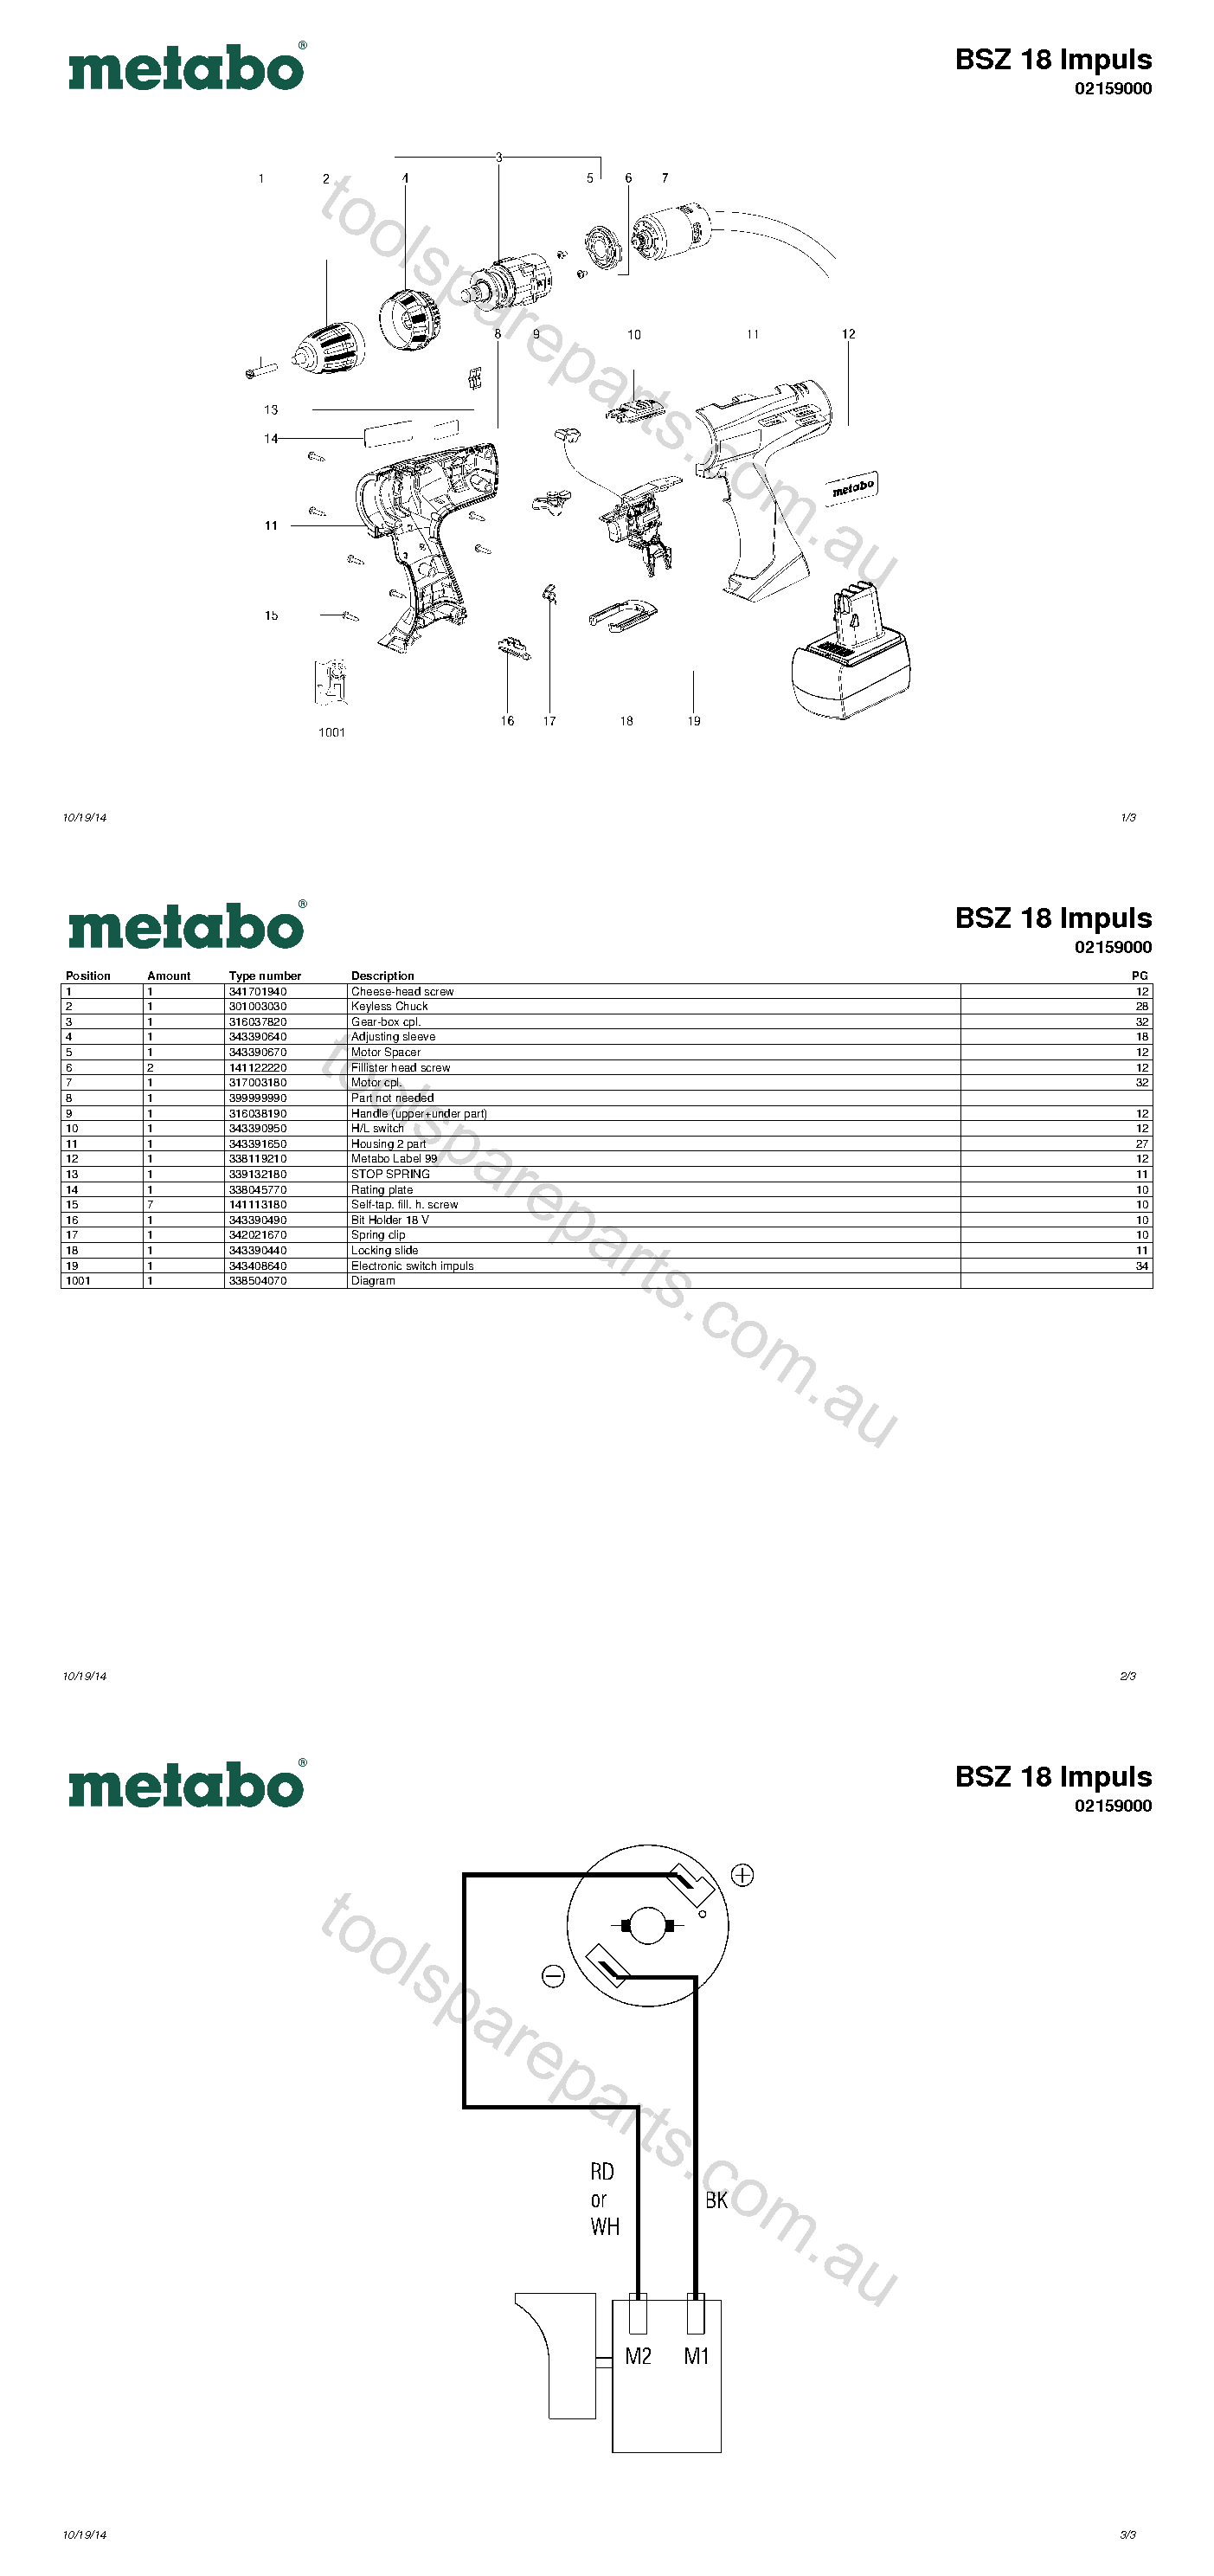 Metabo BSZ 18 Impuls 02159000  Diagram 1